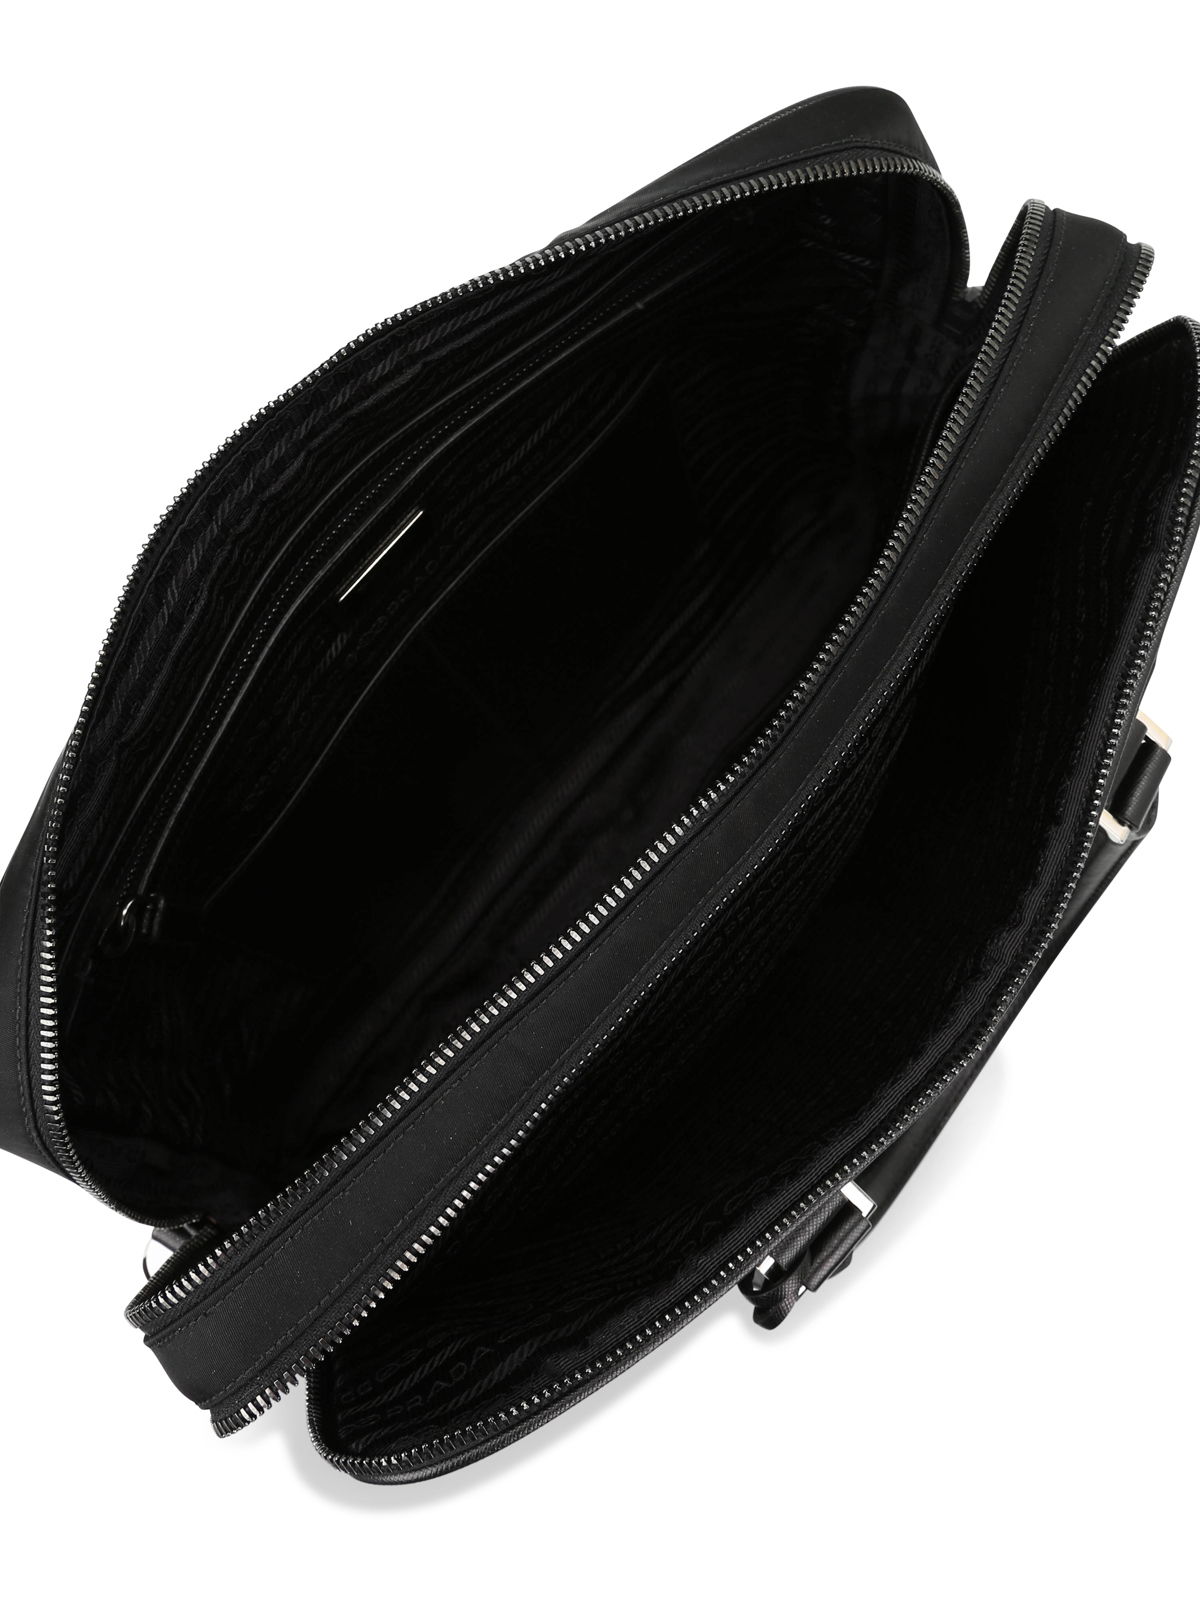 Laptop bags & briefcases Prada - Double zip nylon briefcase -  2VE002064F000200